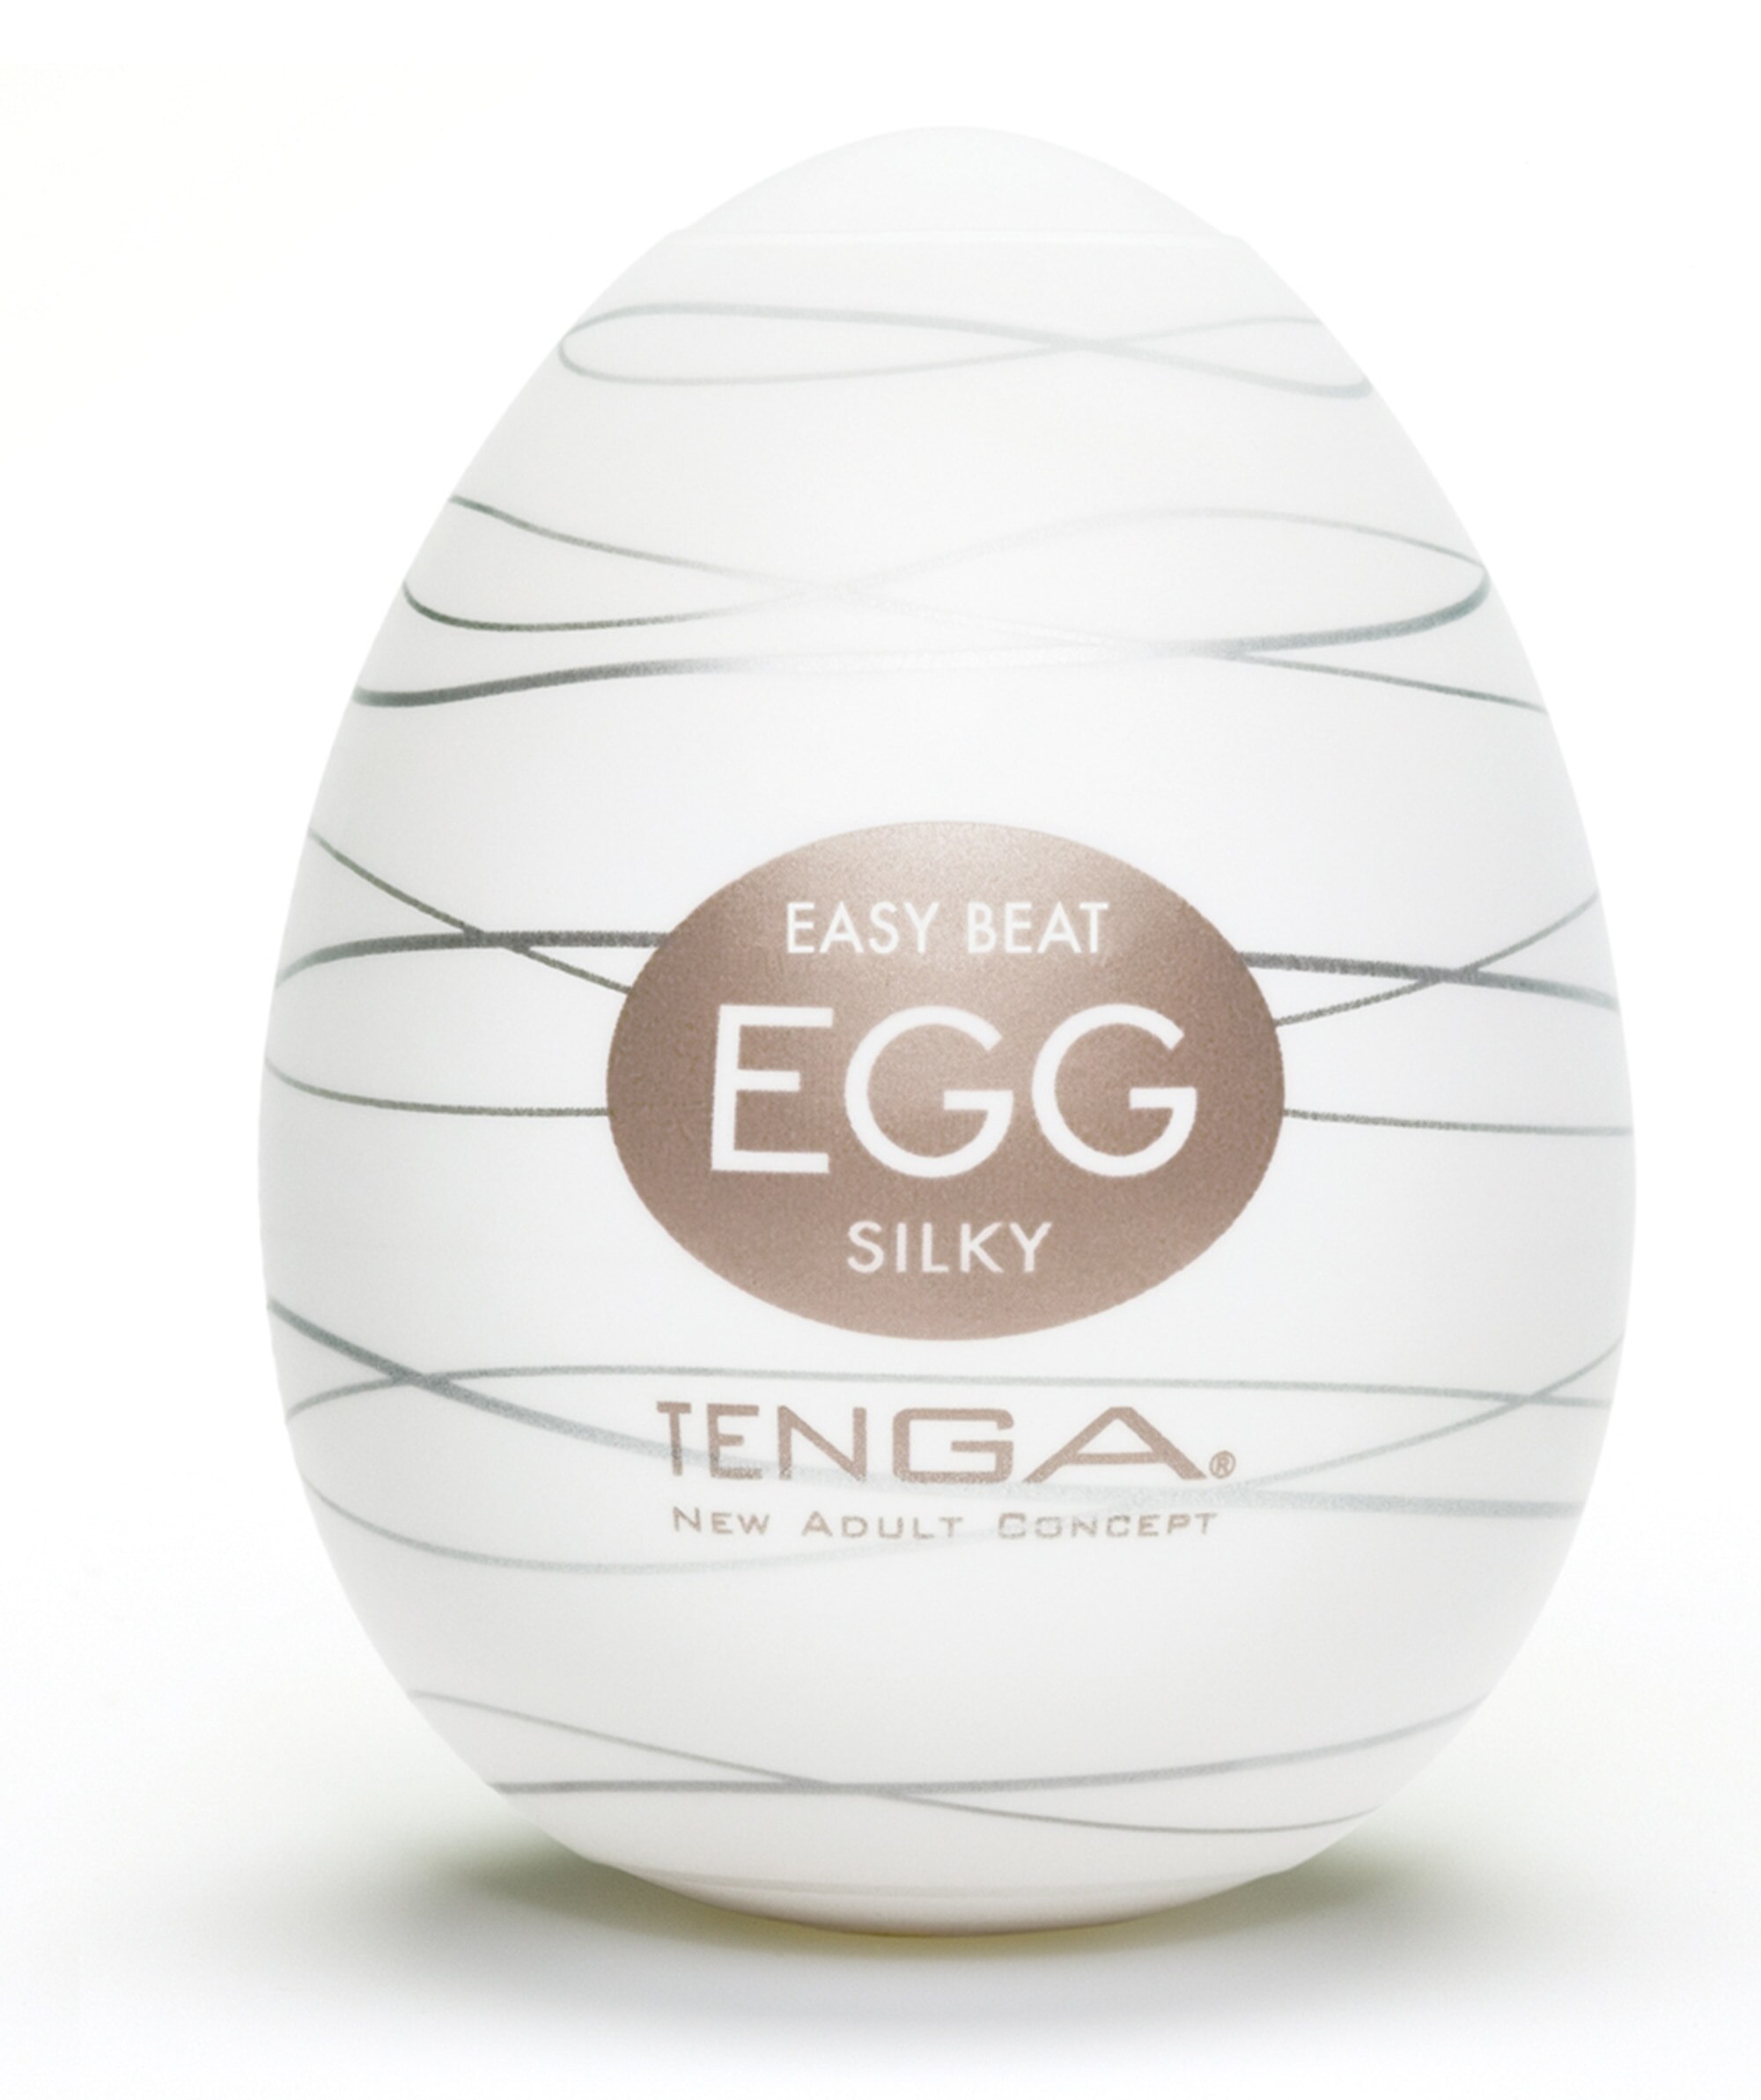 Tenga Egg Male Toy - Silky